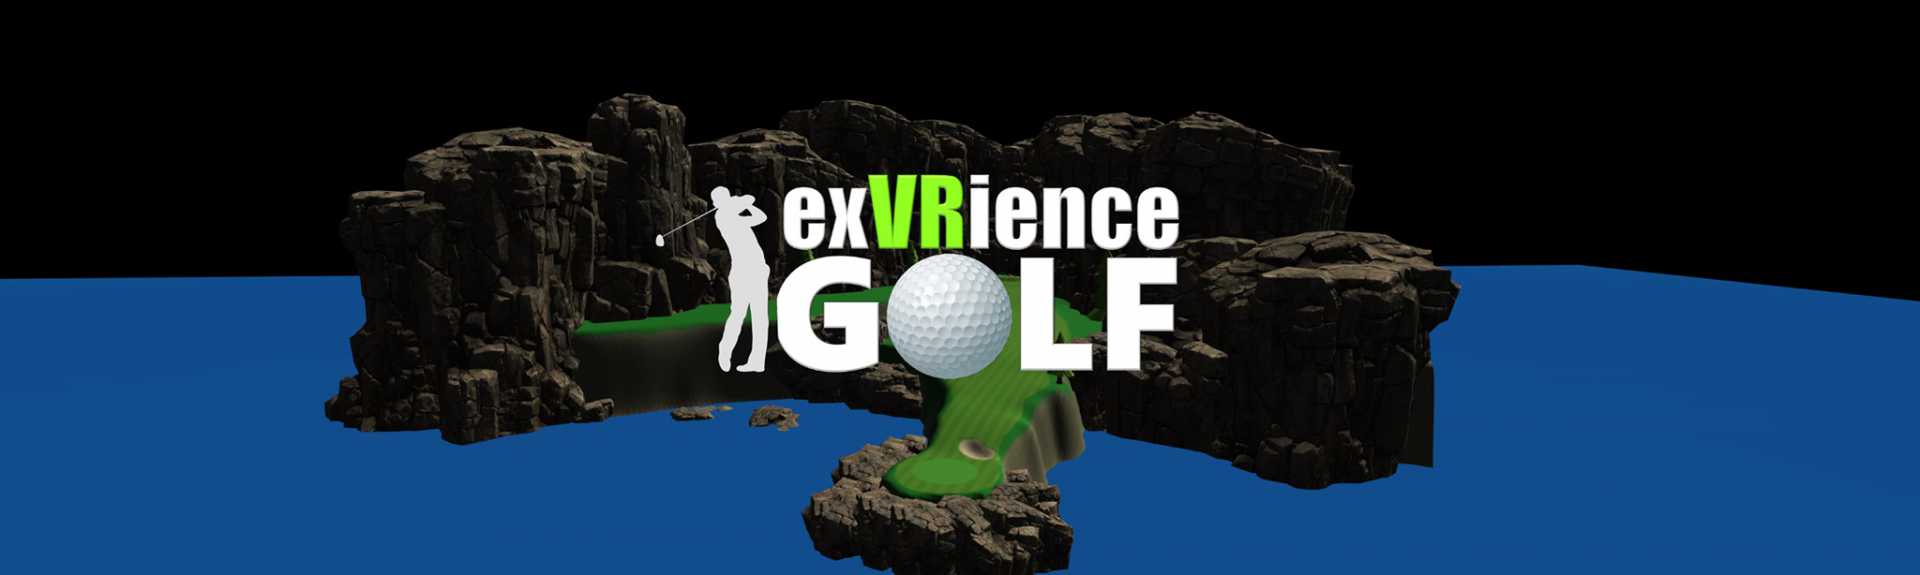 exVRience Golf